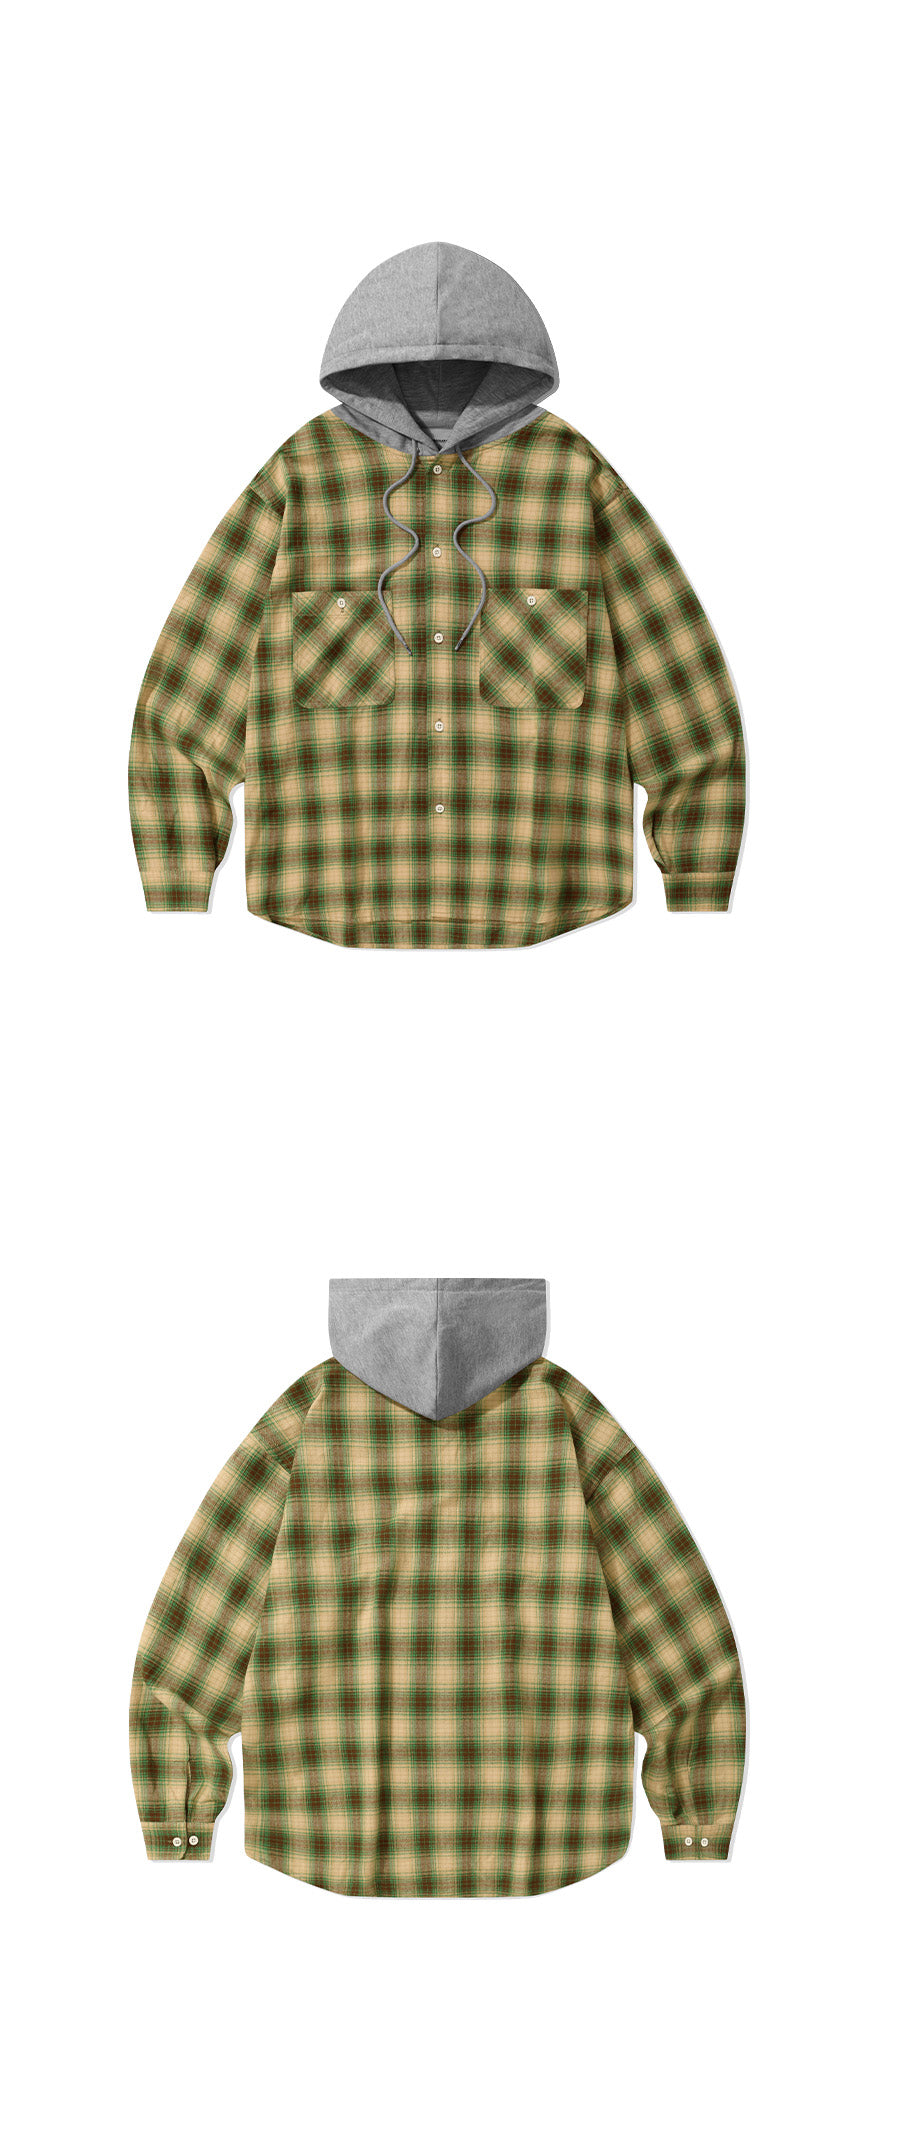 Two Pocket Hoodie Check Shirt-Green